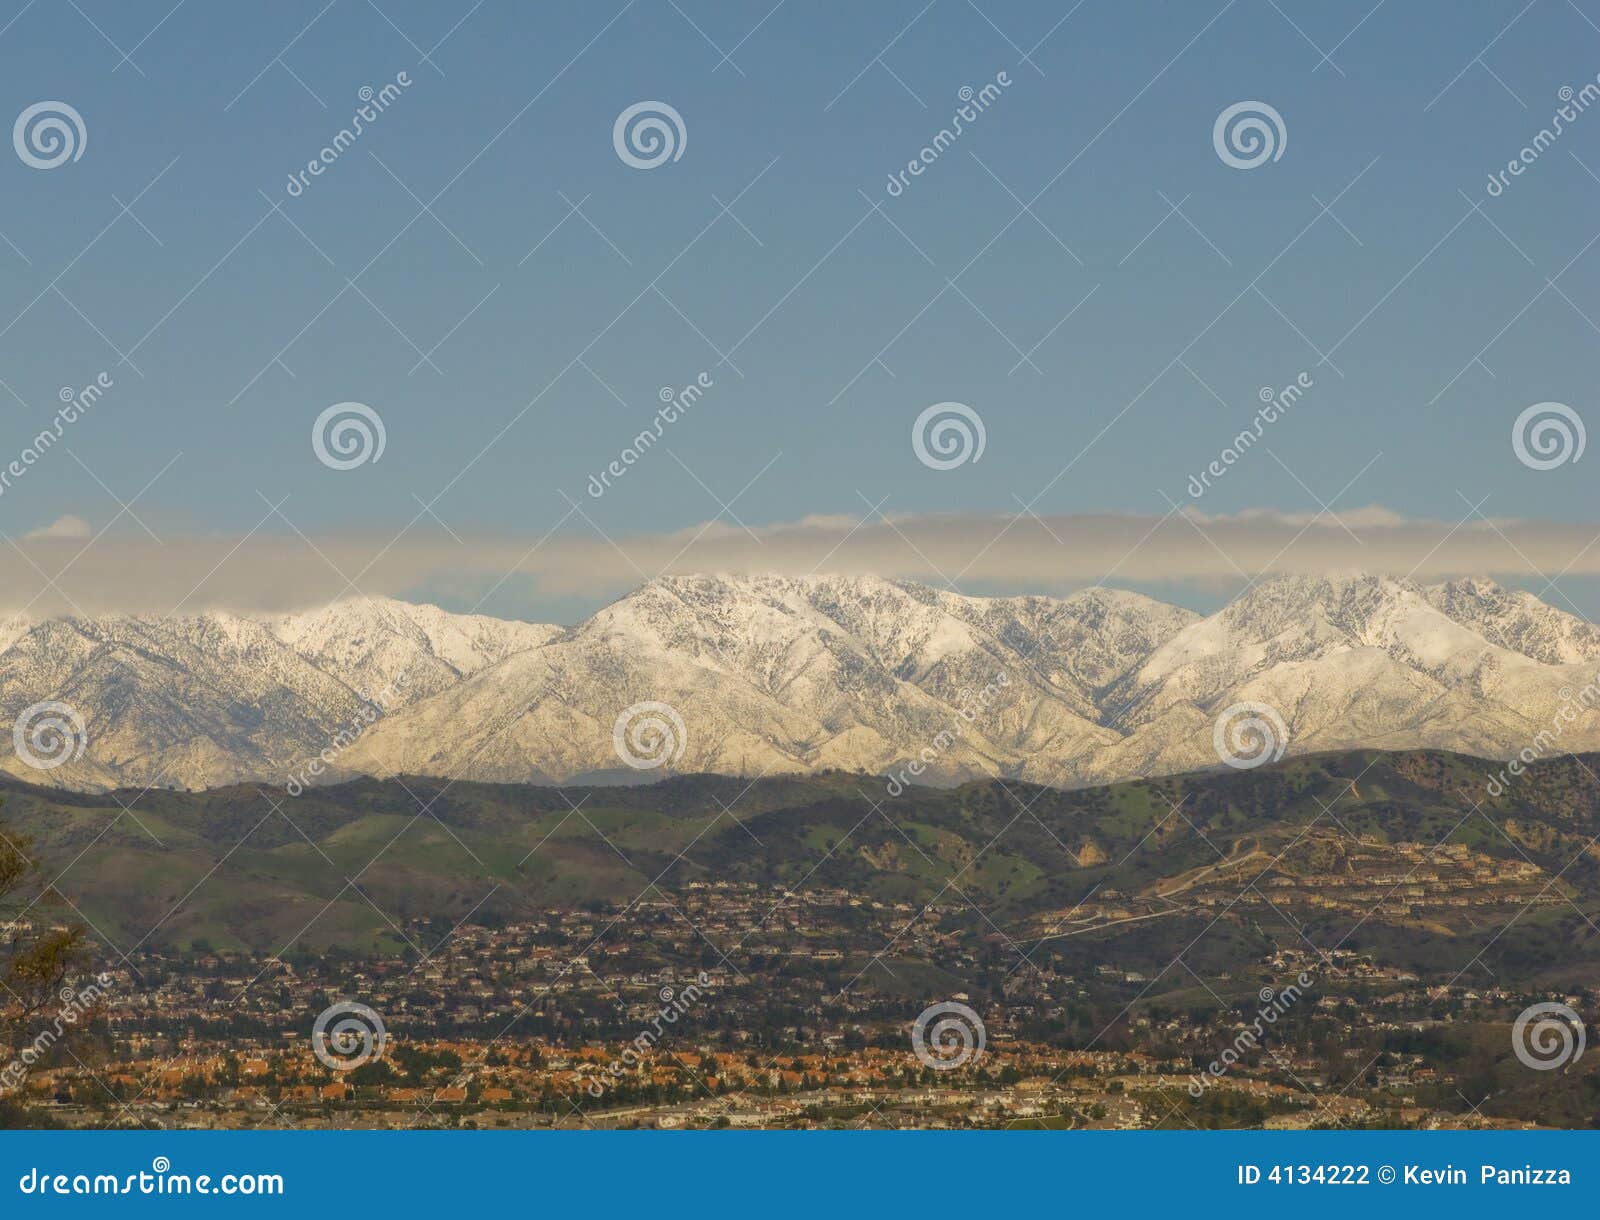 san bernardino mountains in winter